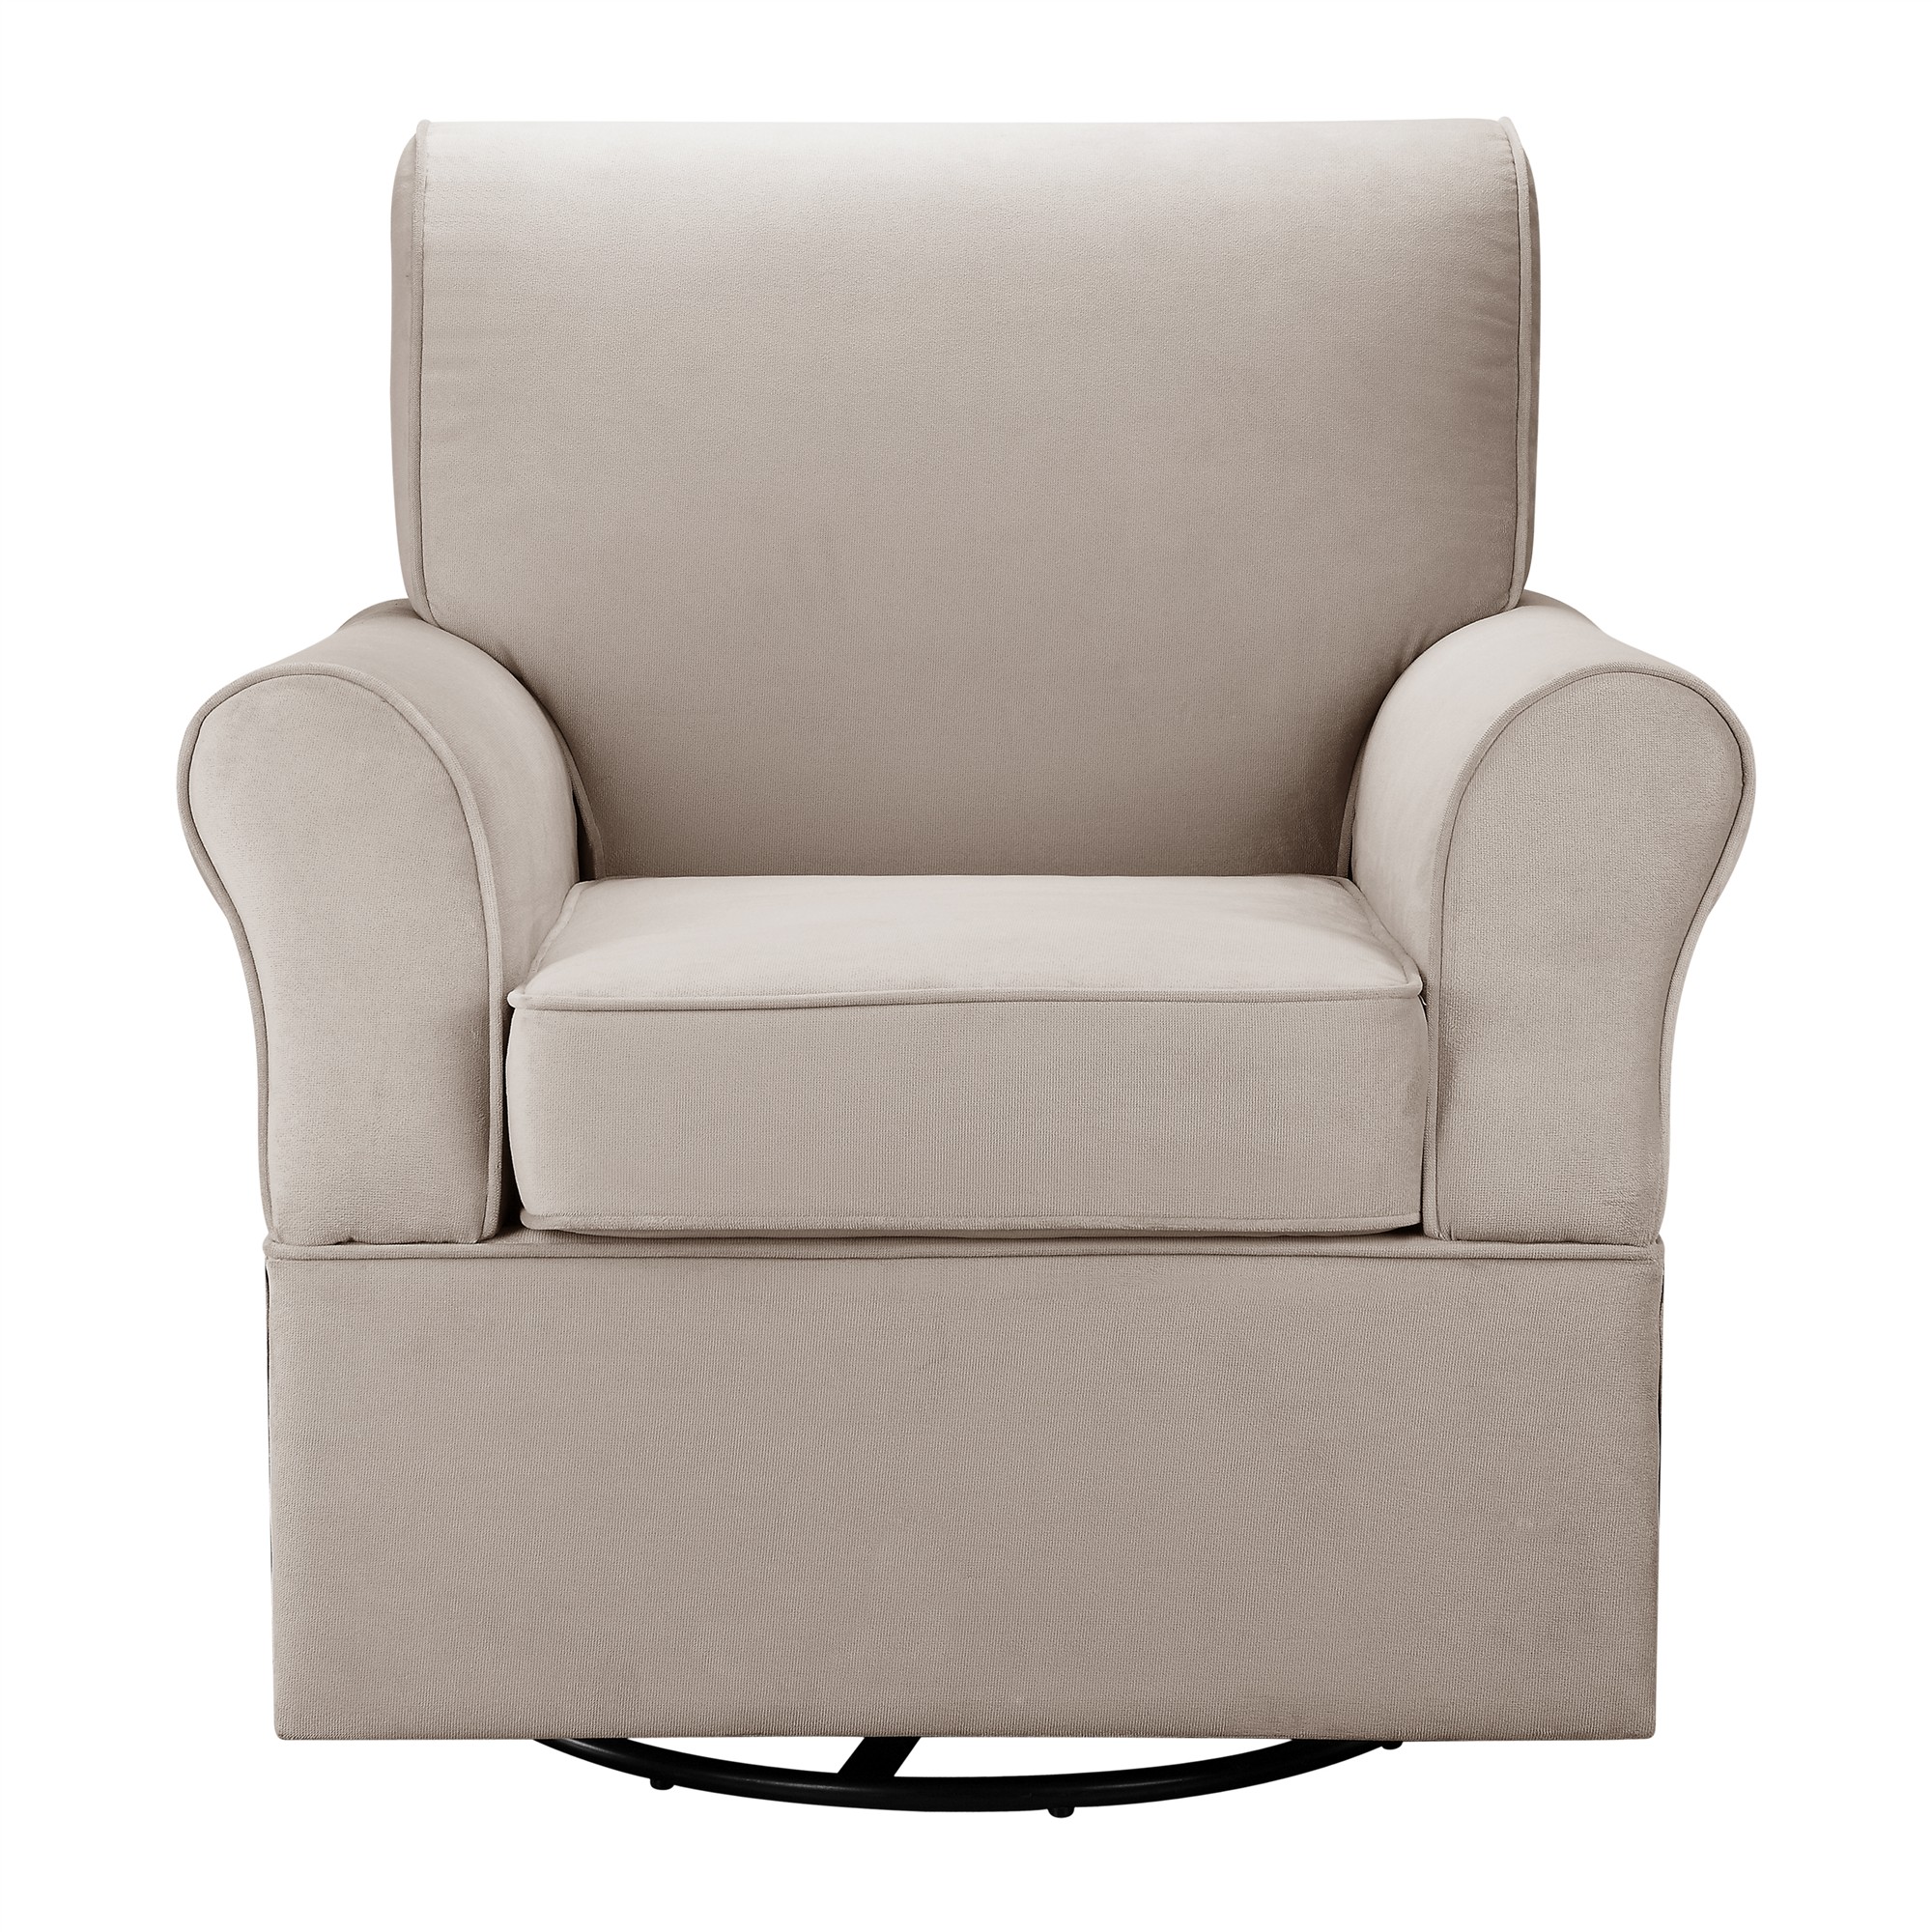 Baby Relax Kelcie Swivel Glider Chair & Ottoman Nursery Set, Beige Microfiber - image 4 of 15